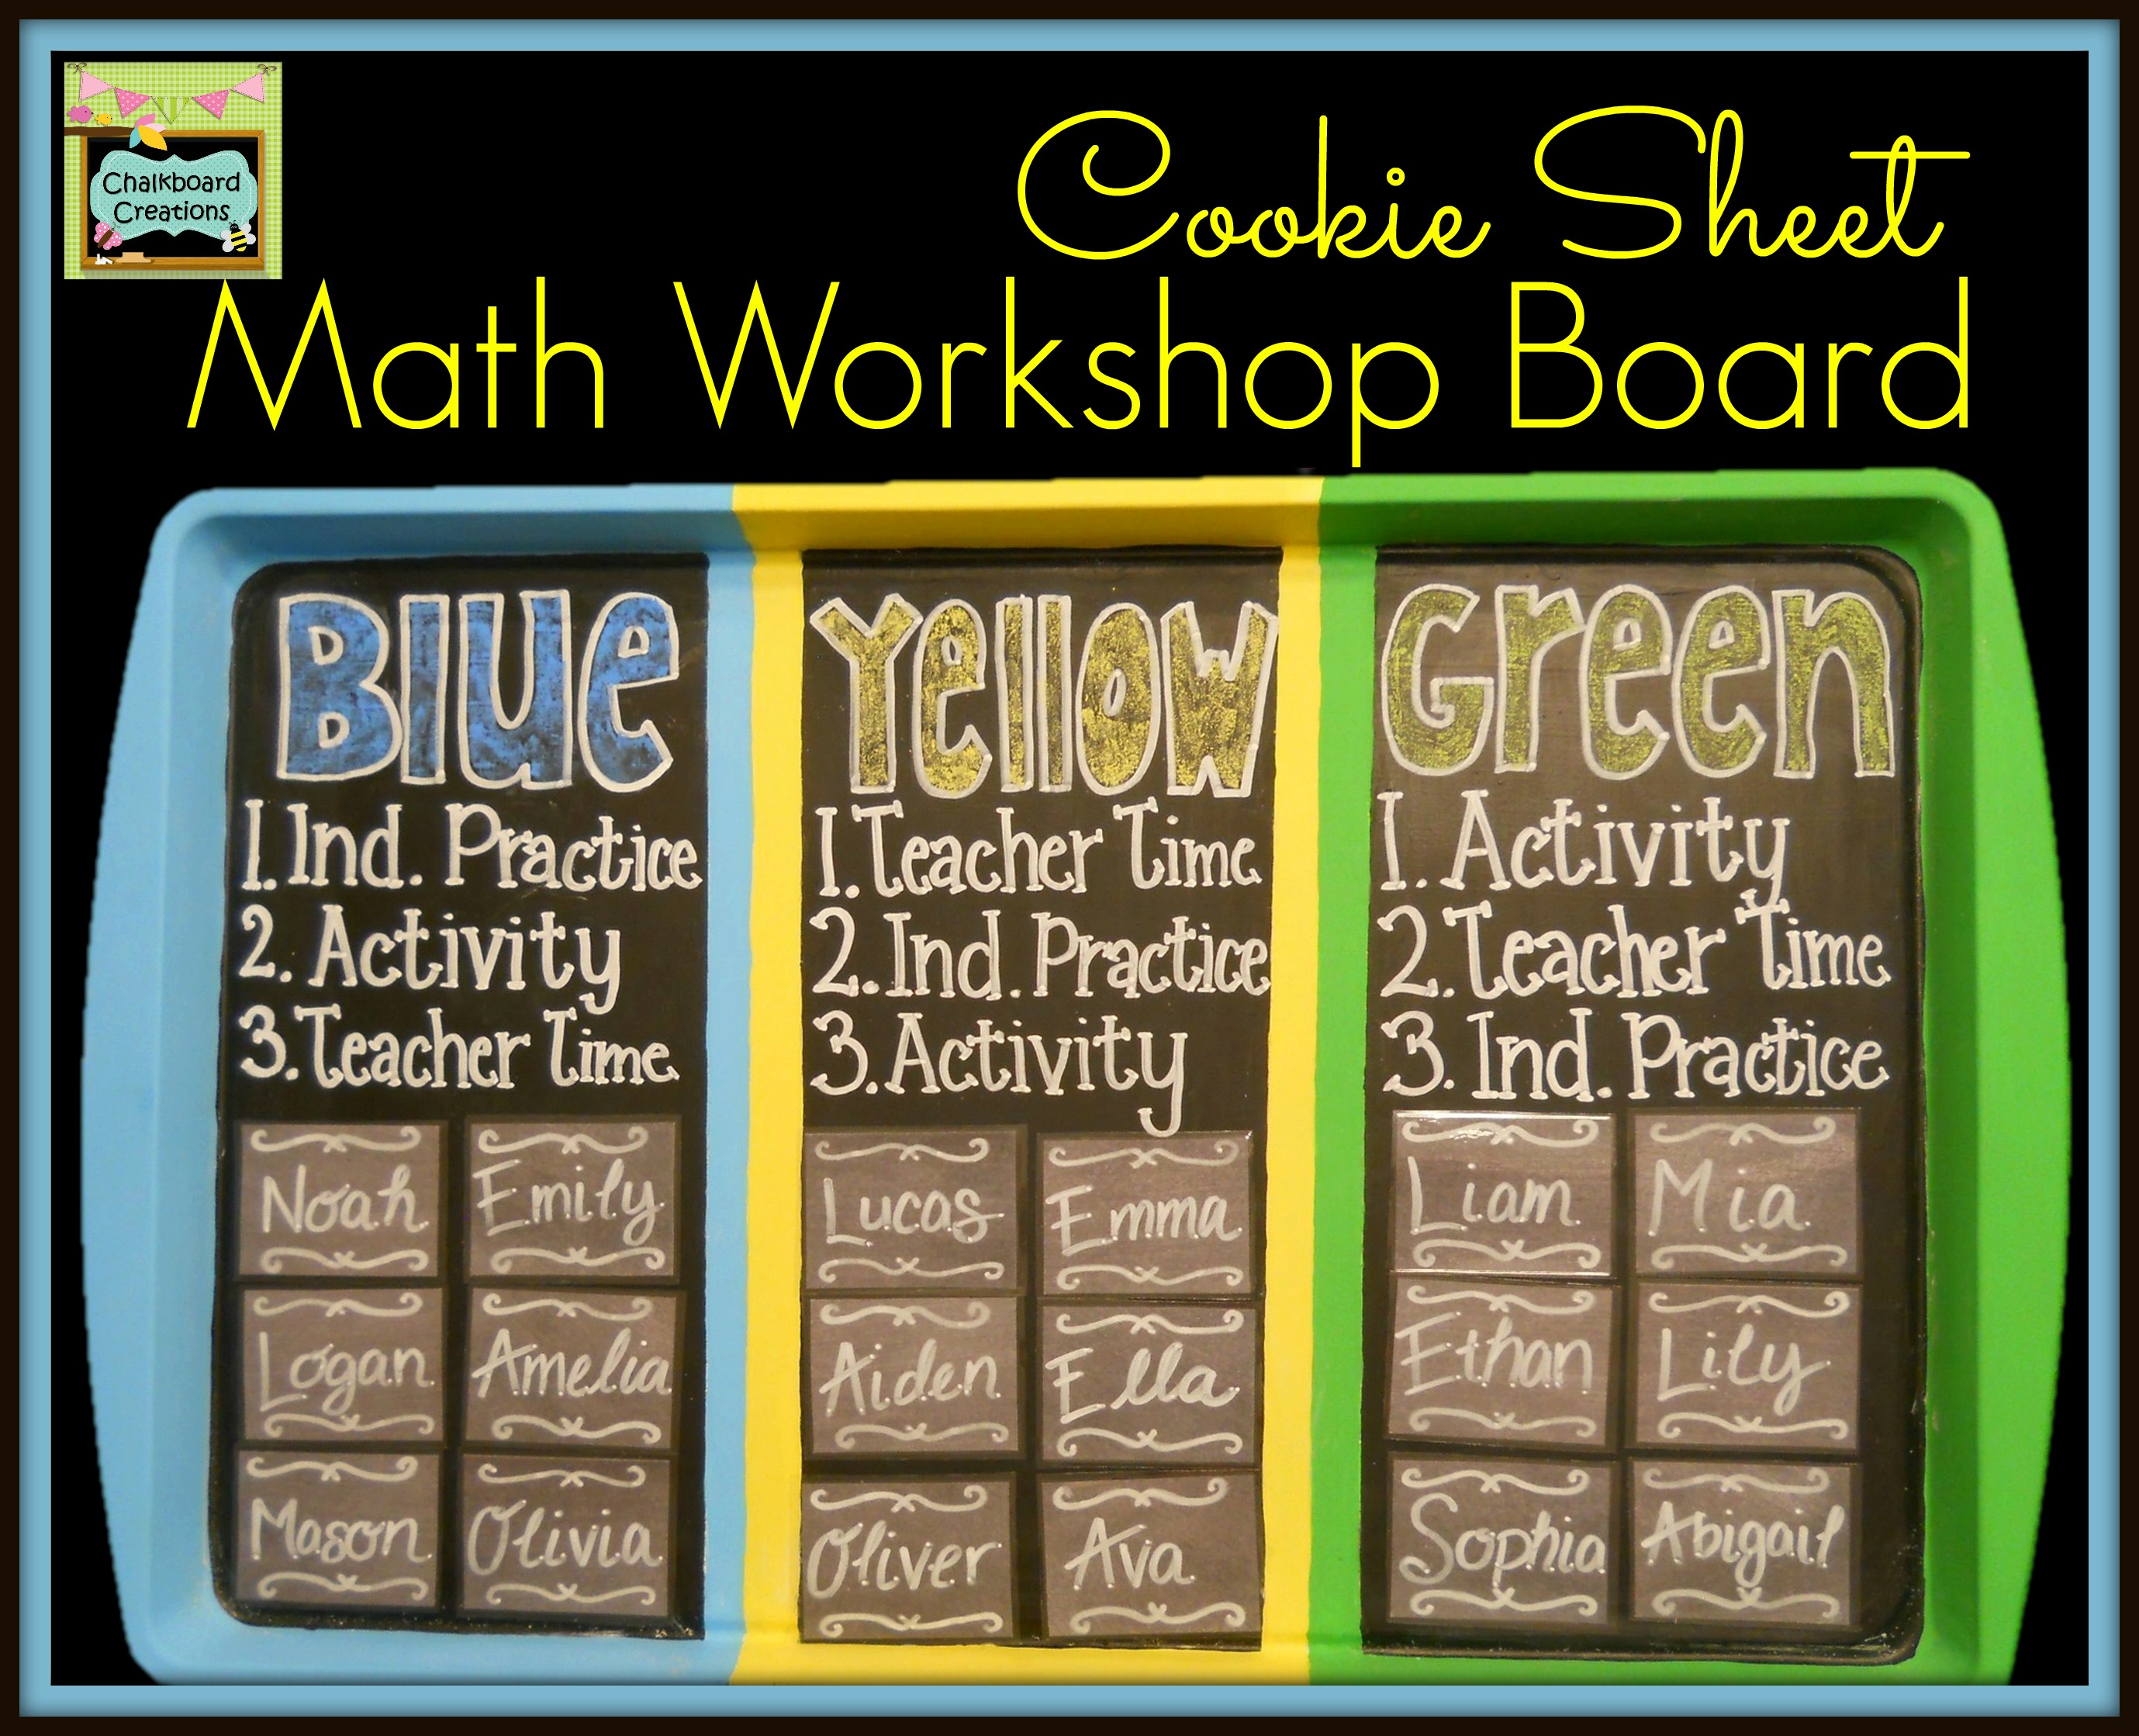 Cookie Sheet Math Workshop Board